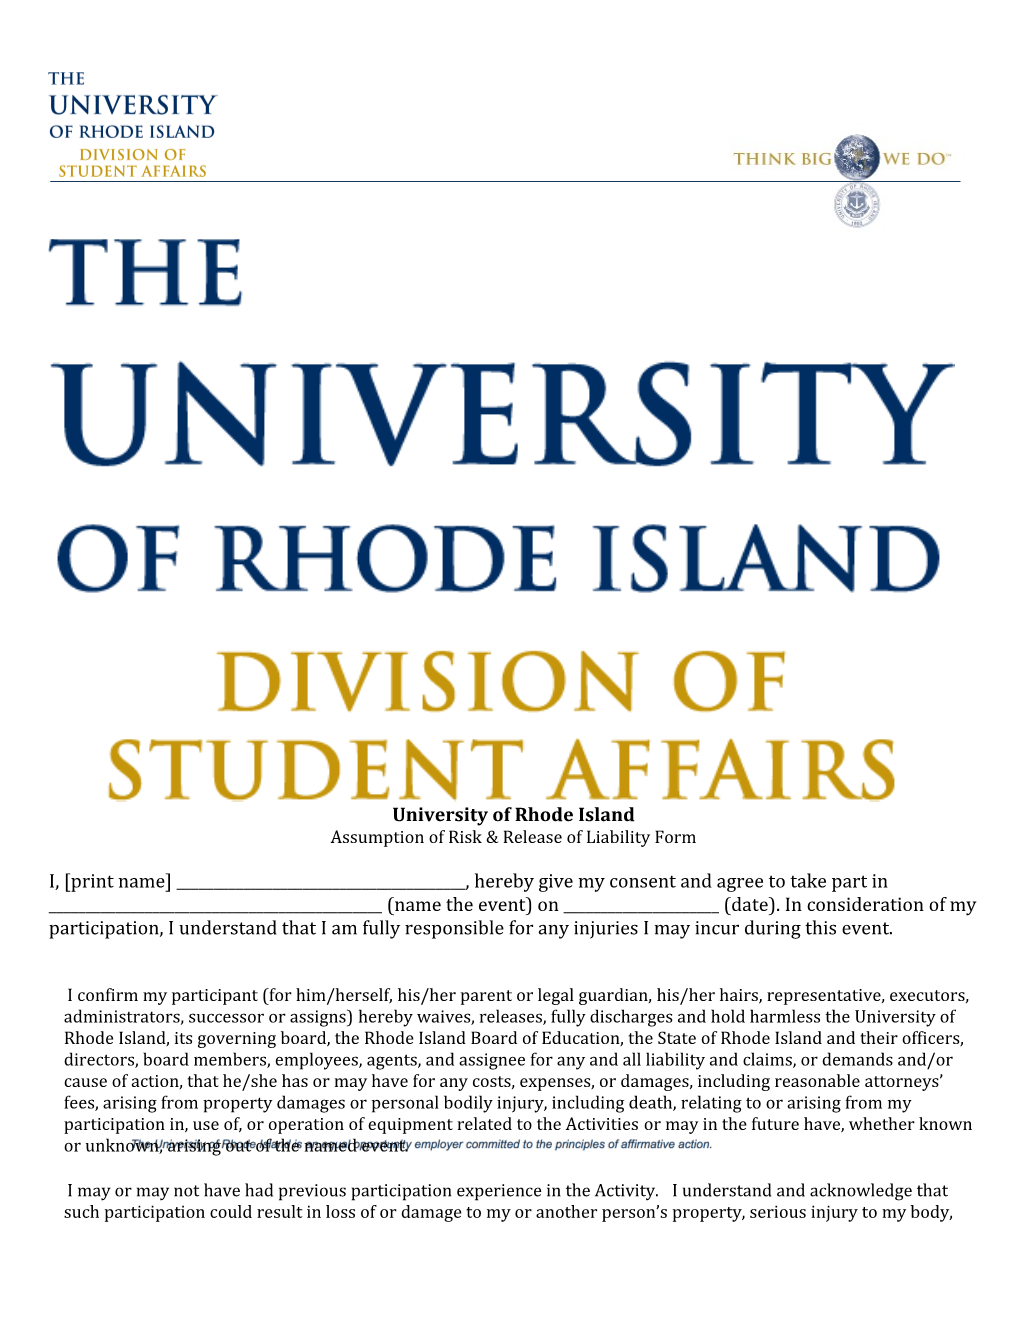 University of Rhode Island s6